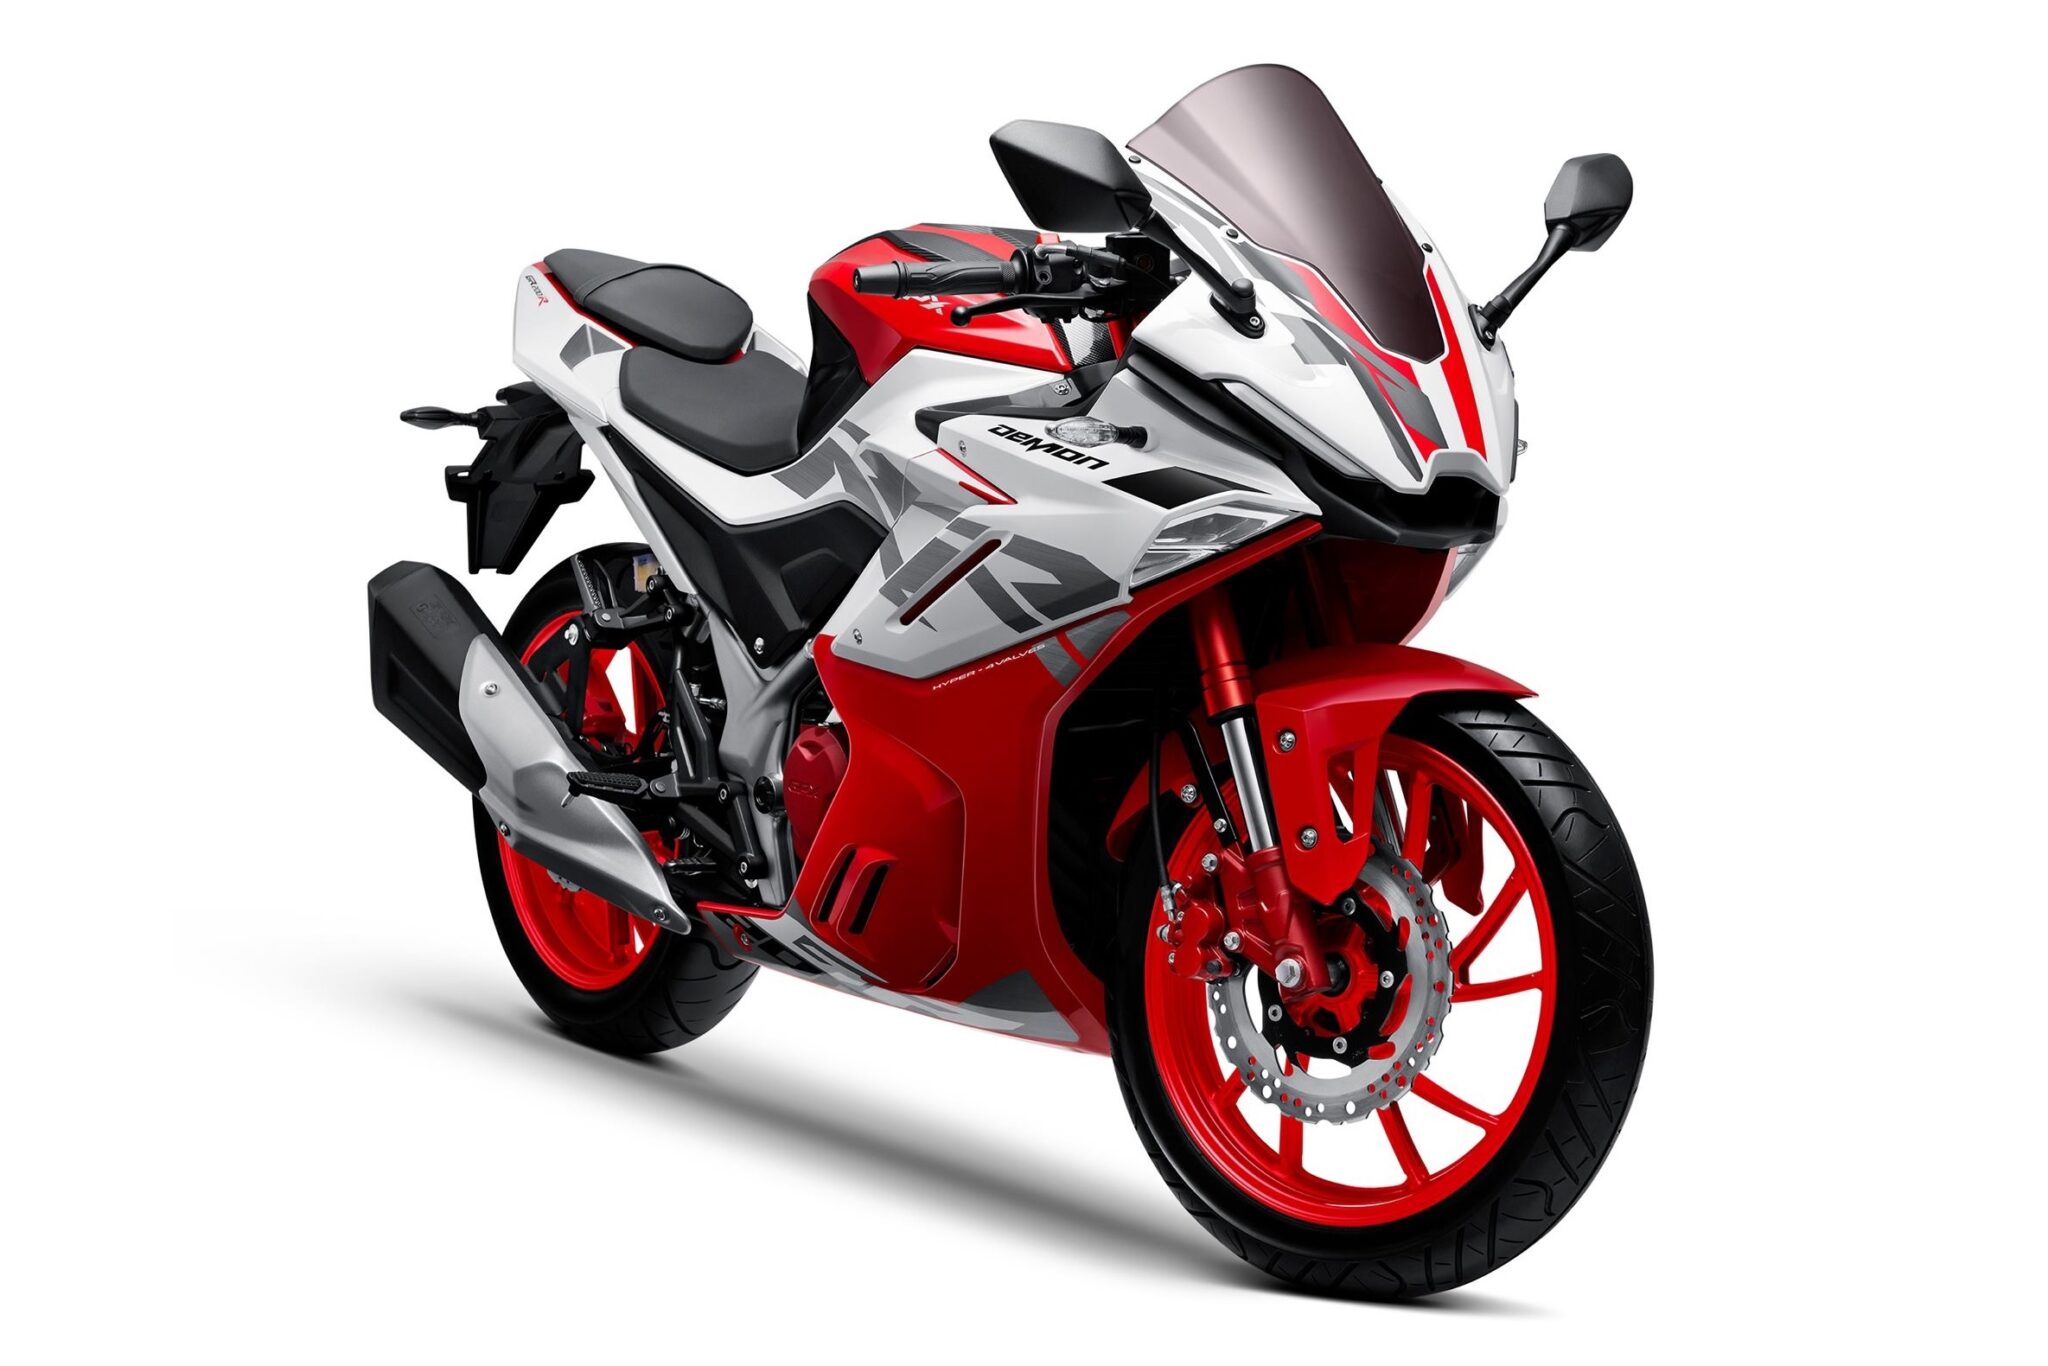 Giá xe GPX Demon 150GR rẻ nhất VN kèm review xe moto 150 GR